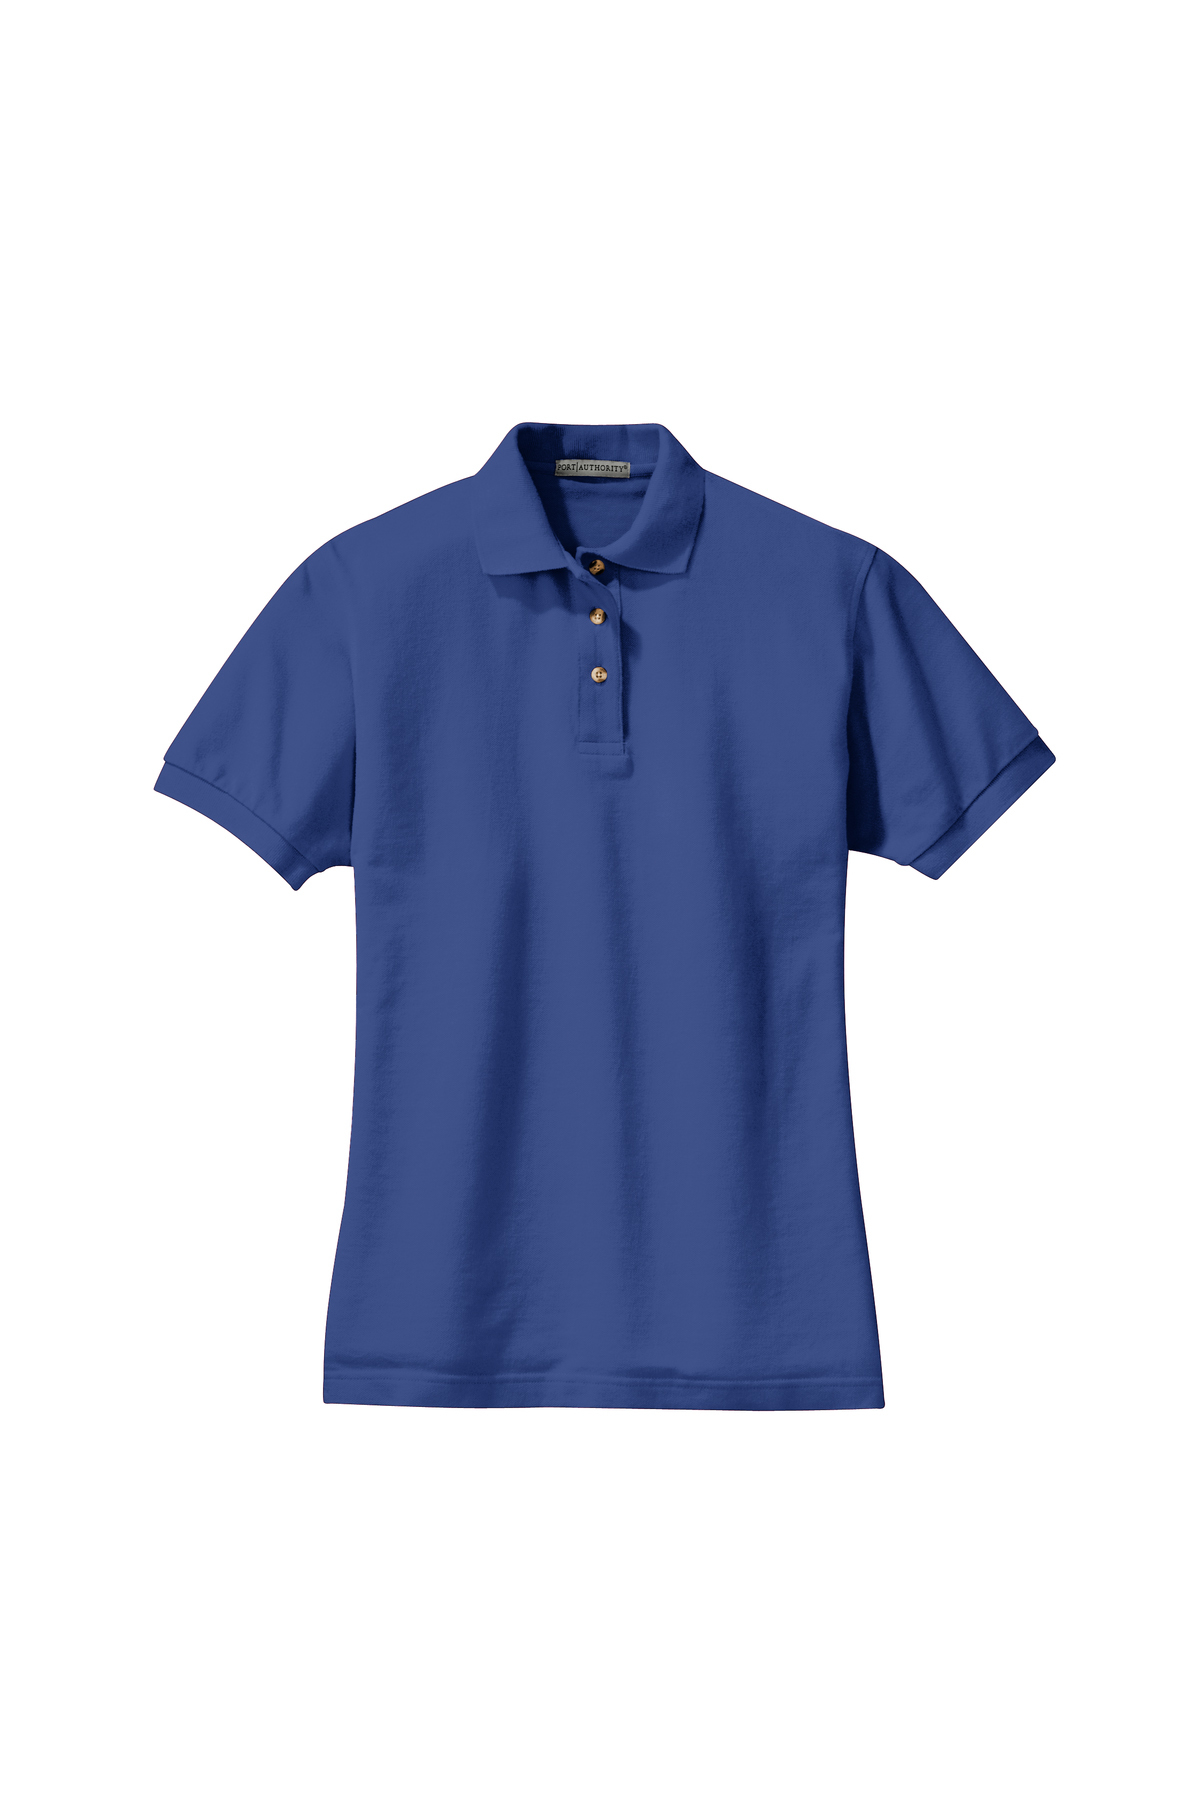 L420 Port Authority Ladies Pique Sport Shirt Available in 24 Colors 